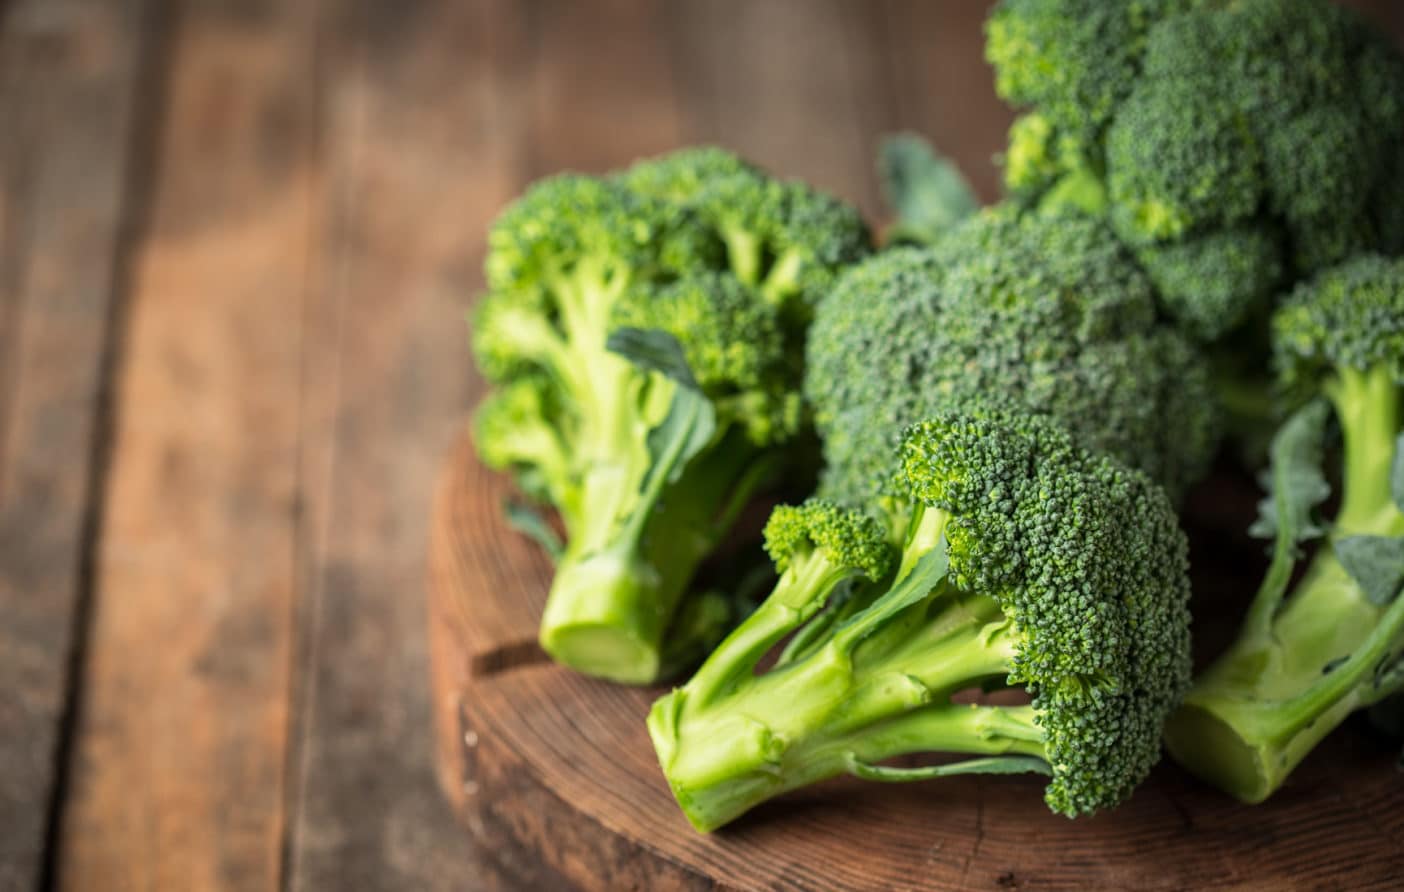 Brokkoli-Extrakt, Brassica Oleracea Italica (Broccoli) Seed Extract, Broccolisamenöl